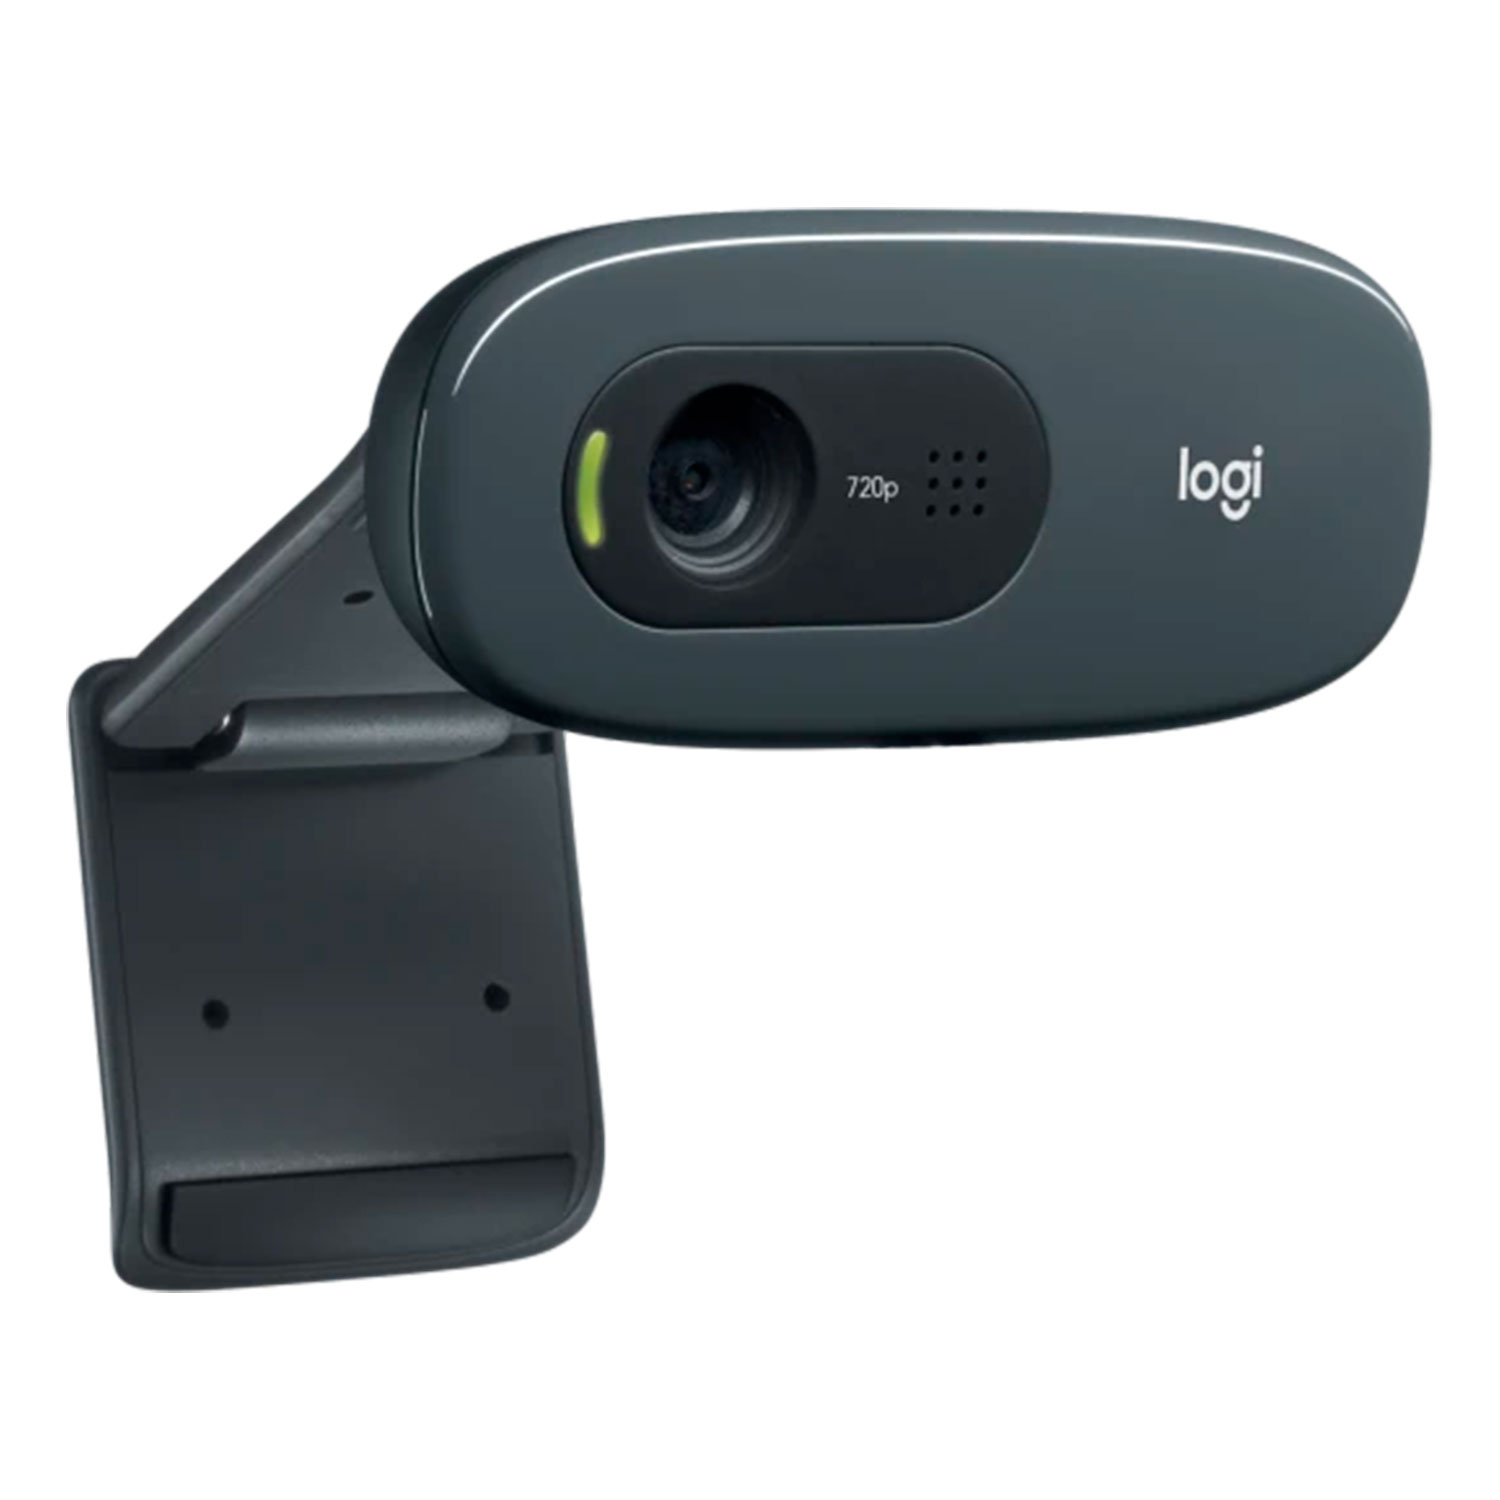 Webcam Logitech C270 HD 720p - (960-000694)